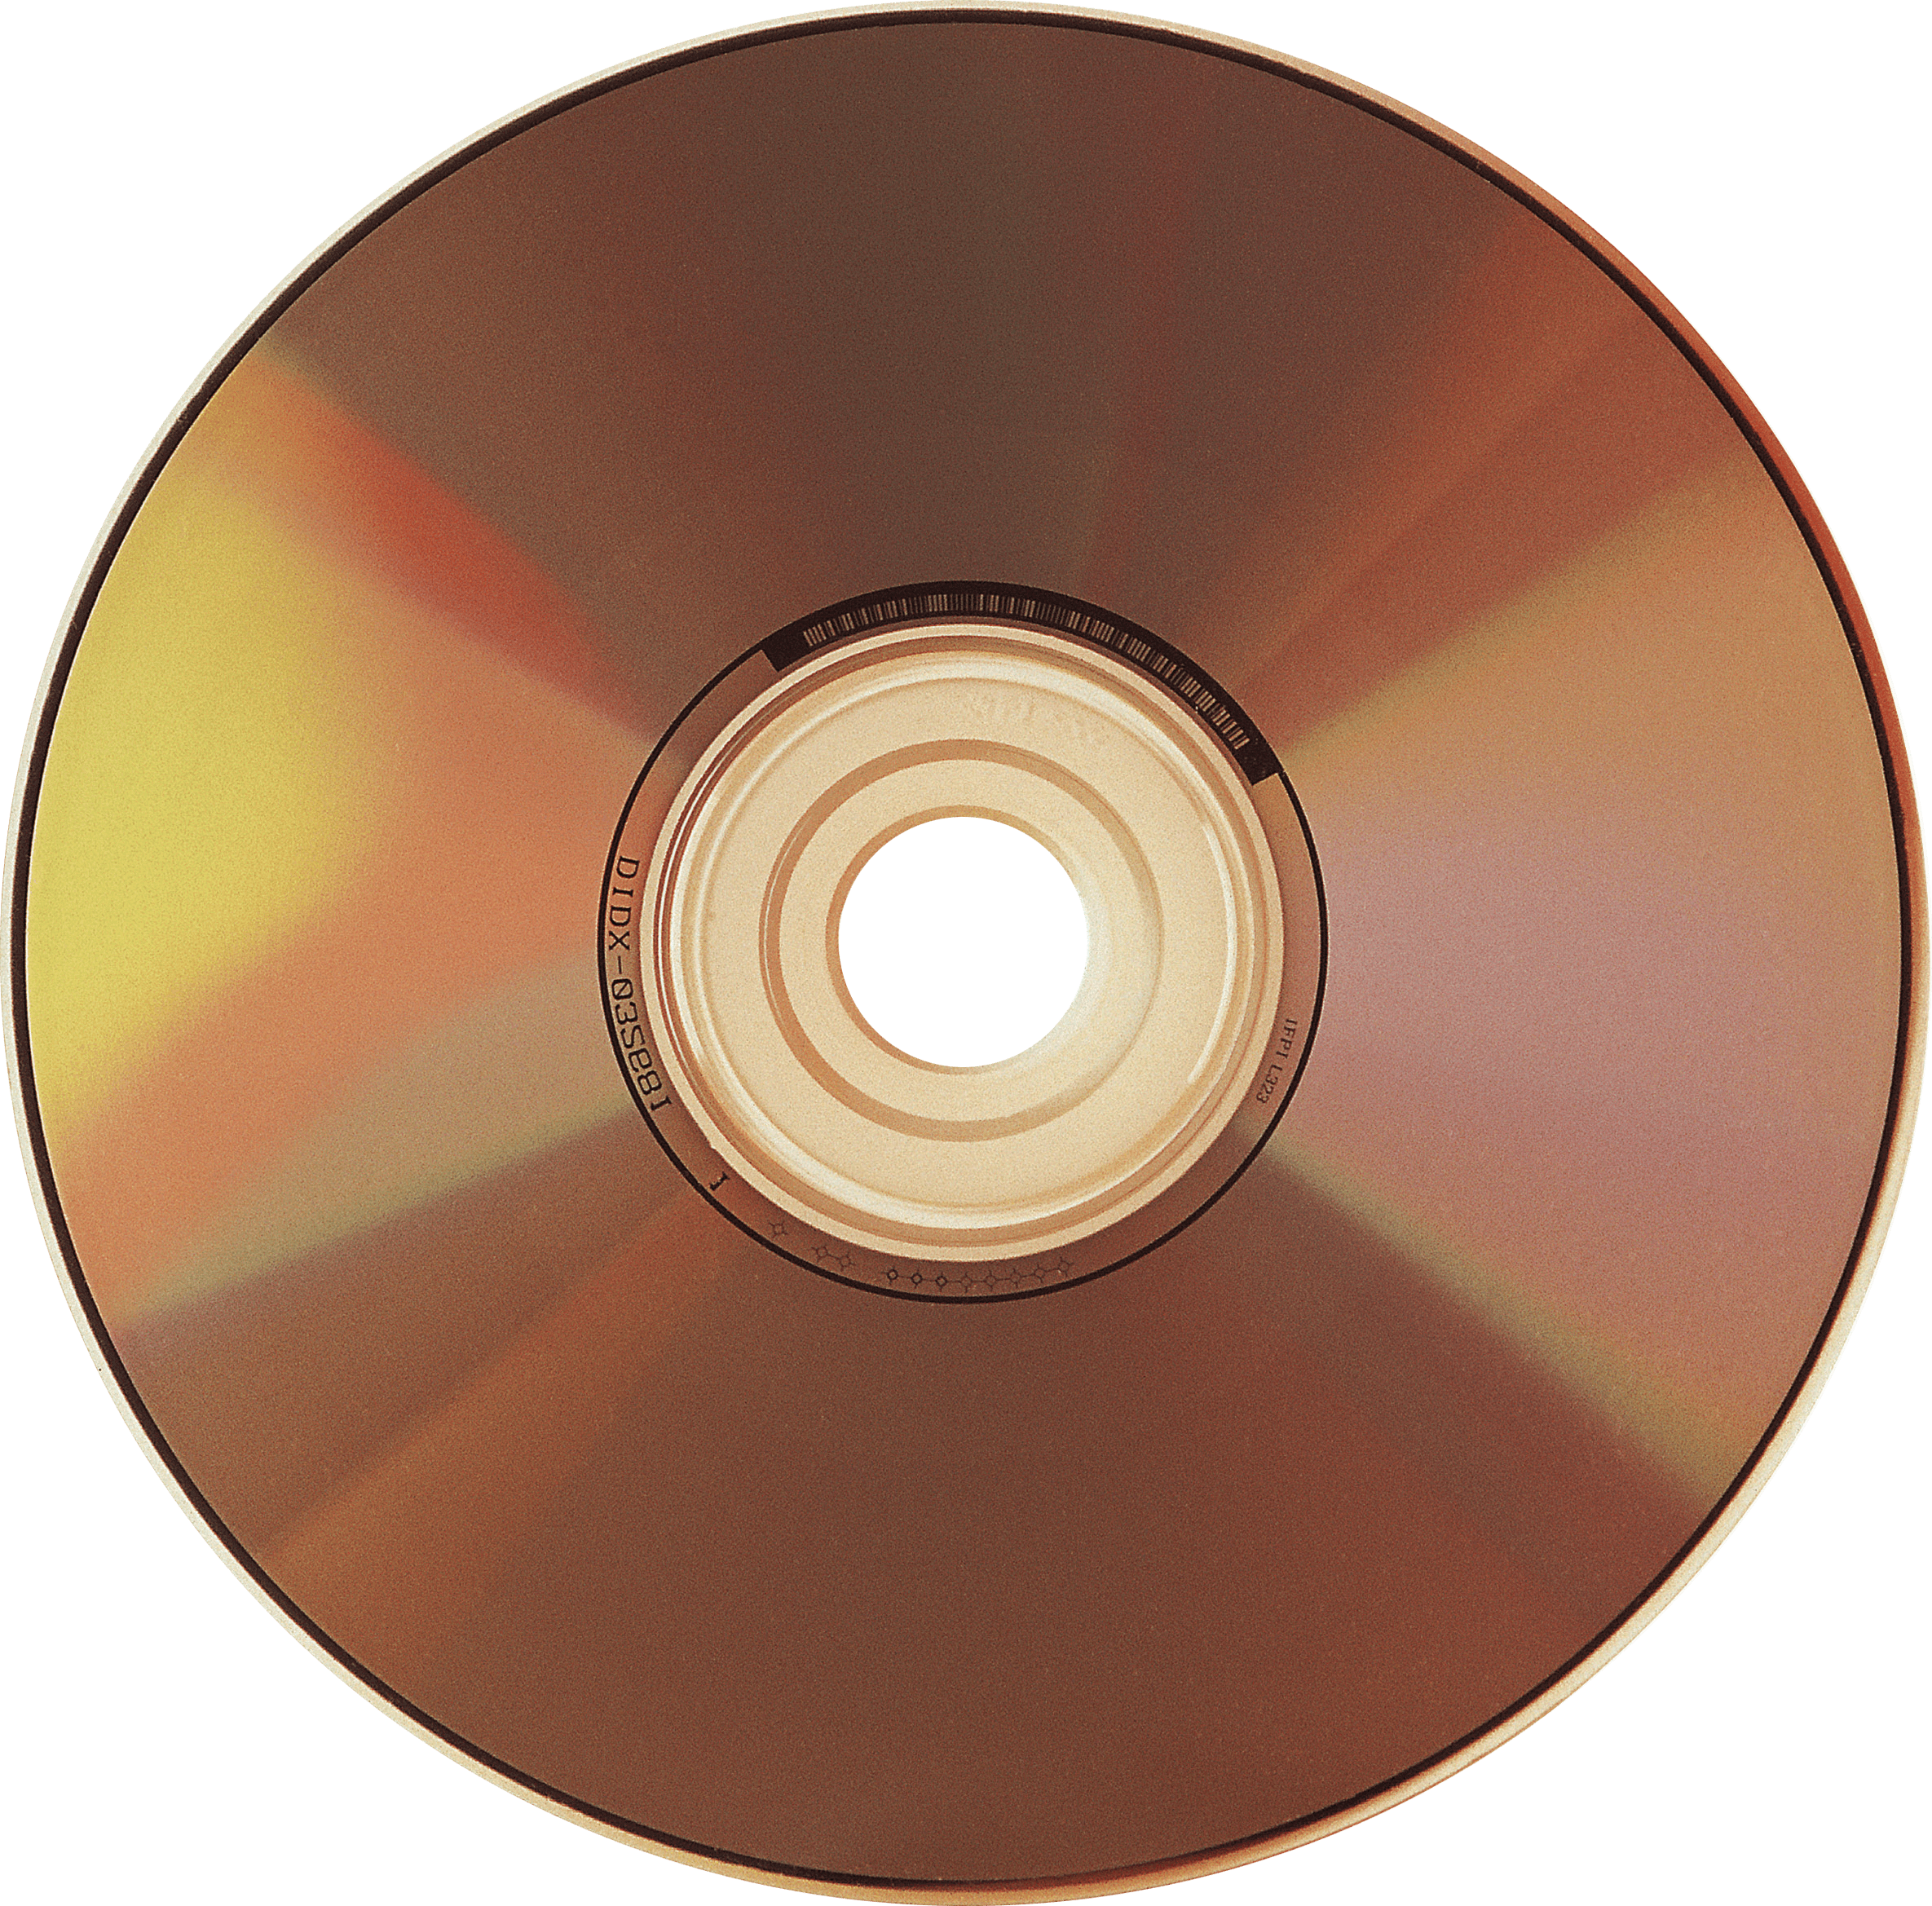 Cd ba. CD - Compact Disk (компакт диск). CD (Compact Disc) — оптический носитель. CD-R DVD. CD-R (Compact Disk Recorder).